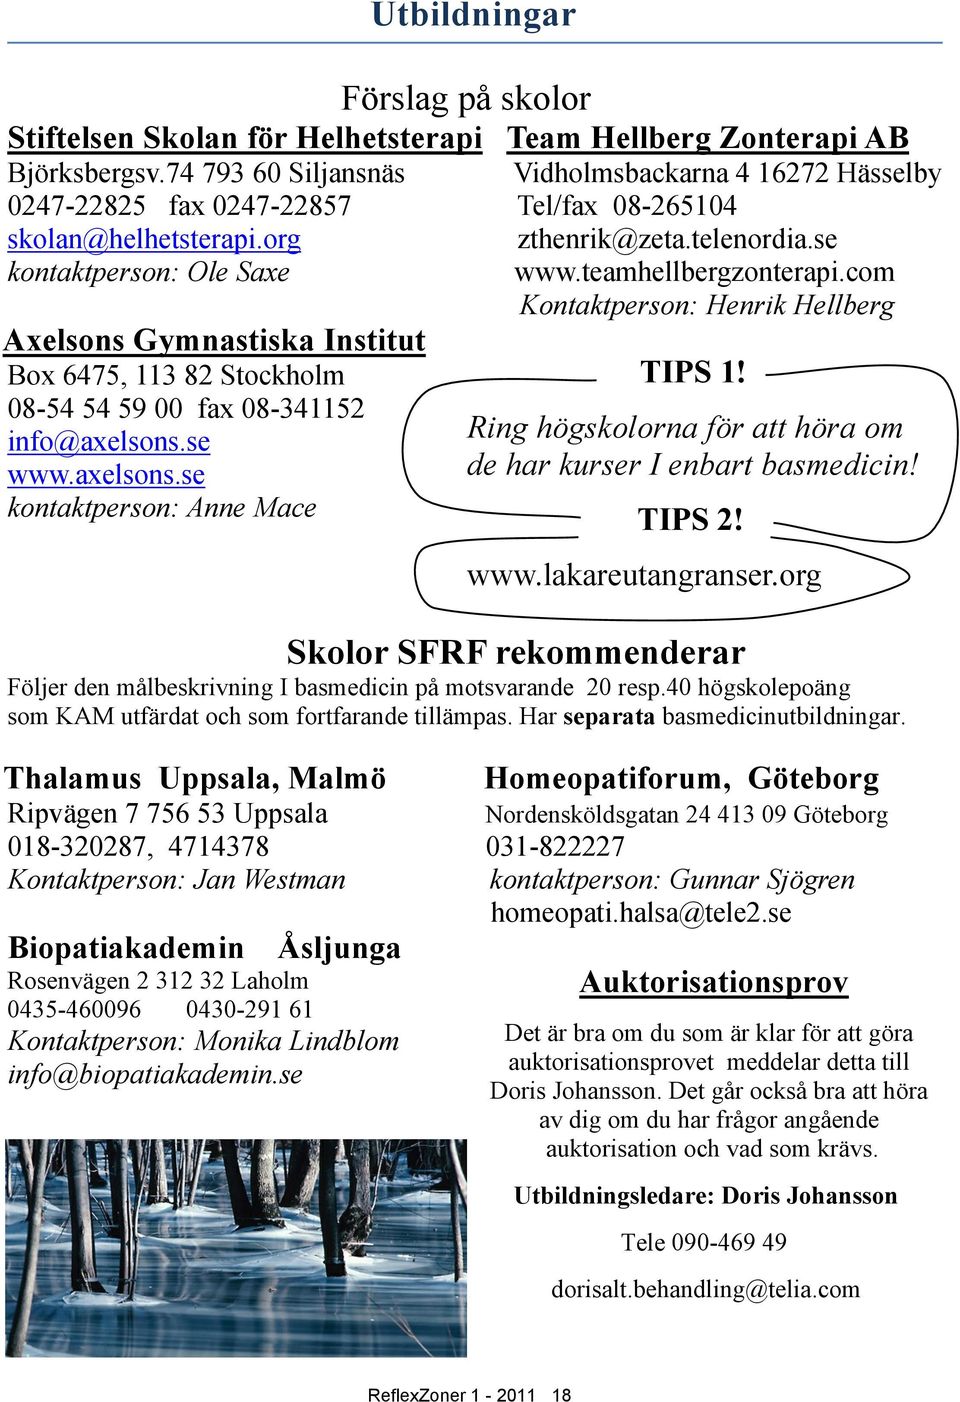 teamhellbergzonterapi.com Kontaktperson: Henrik Hellberg Axelsons Gymnastiska Institut Box 6475, 113 82 Stockholm 08-54 54 59 00 fax 08-341152 info@axelsons.se www.axelsons.se kontaktperson: Anne Mace TIPS 1!